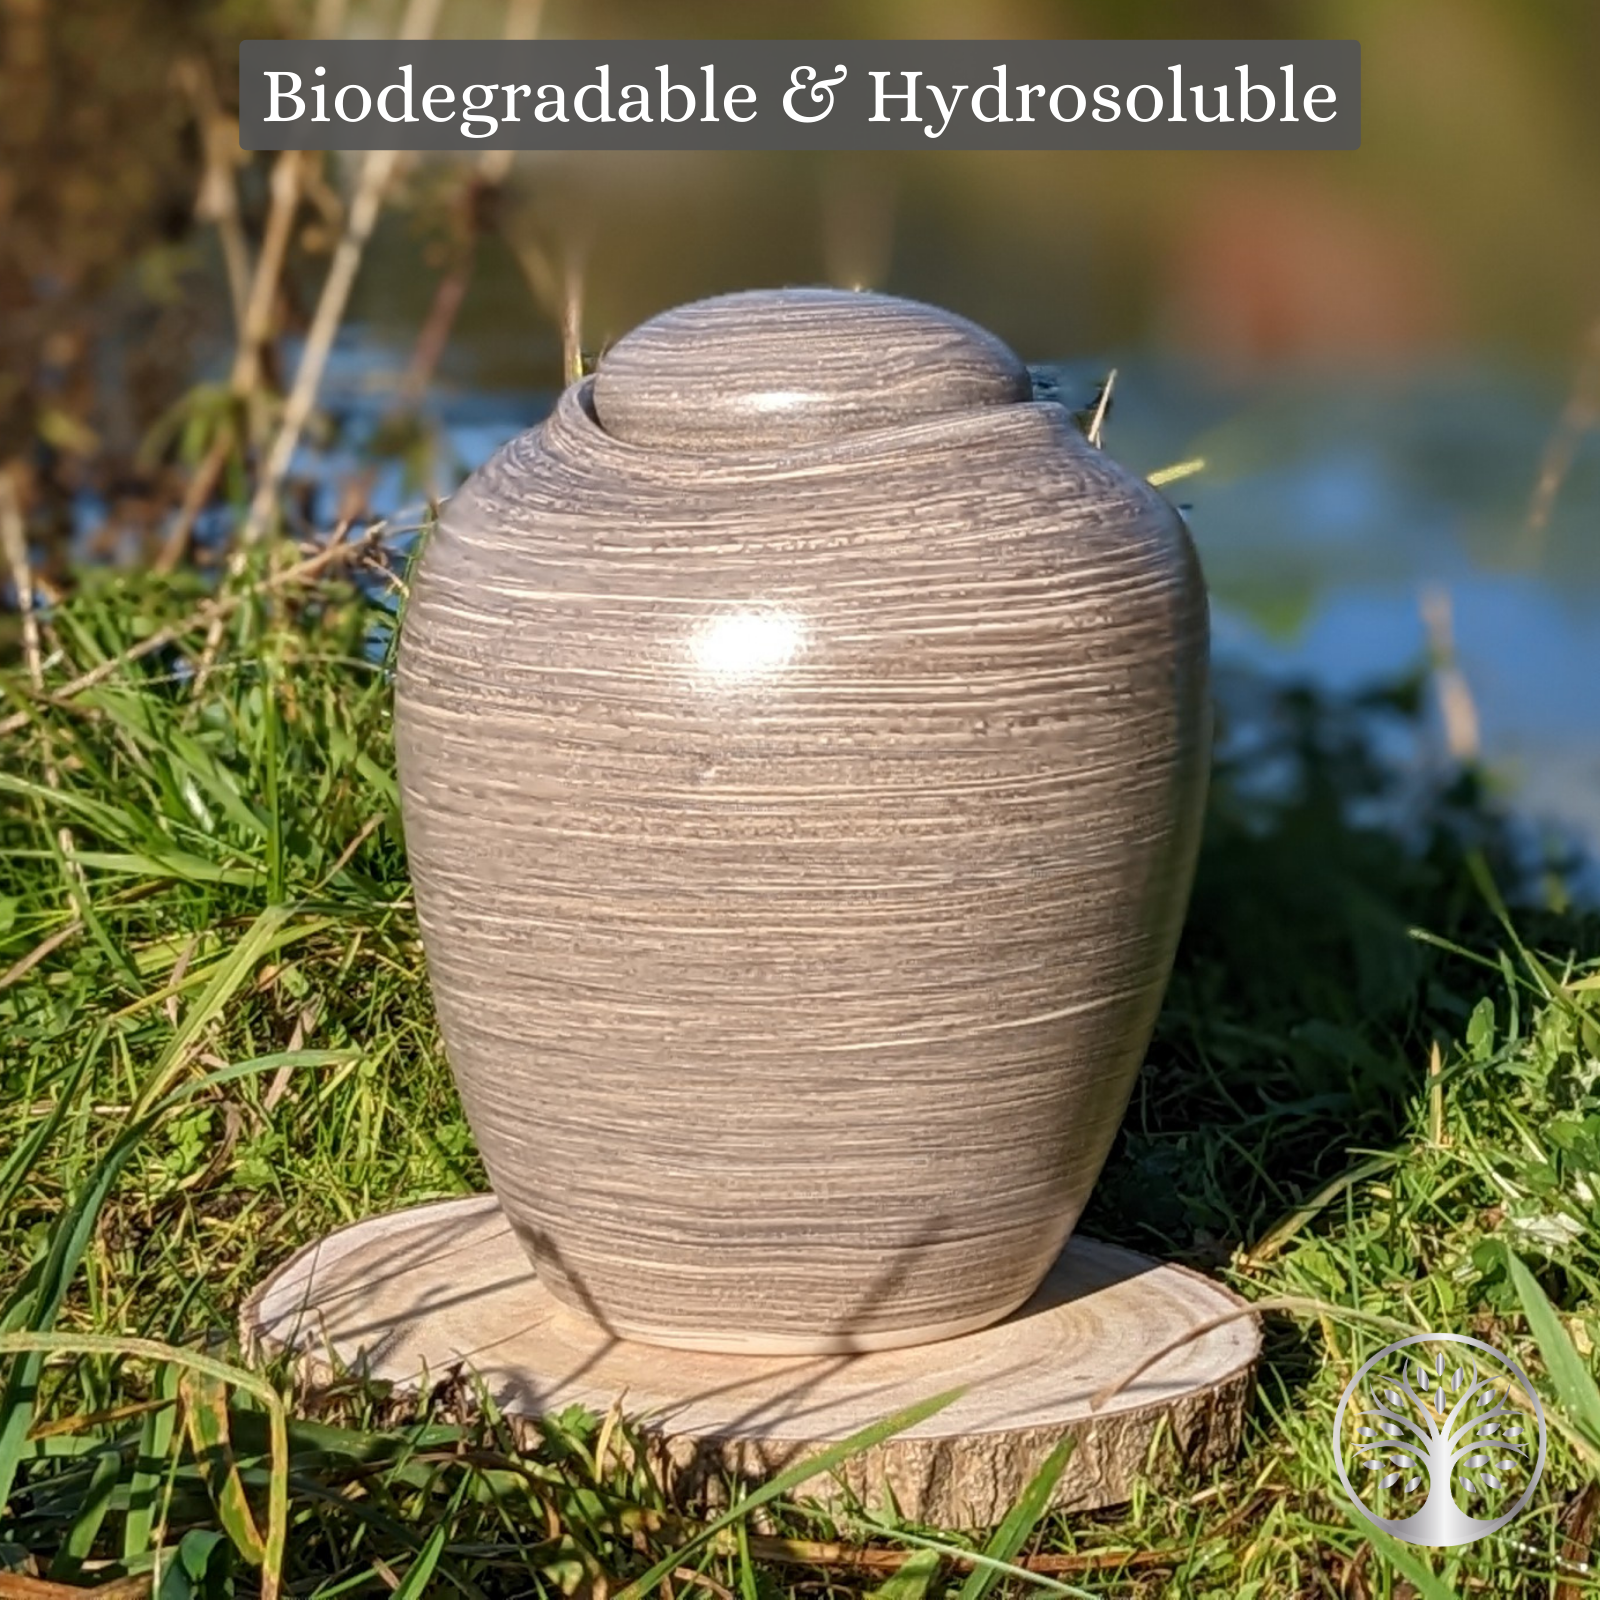 Rio Biodegradable Urn